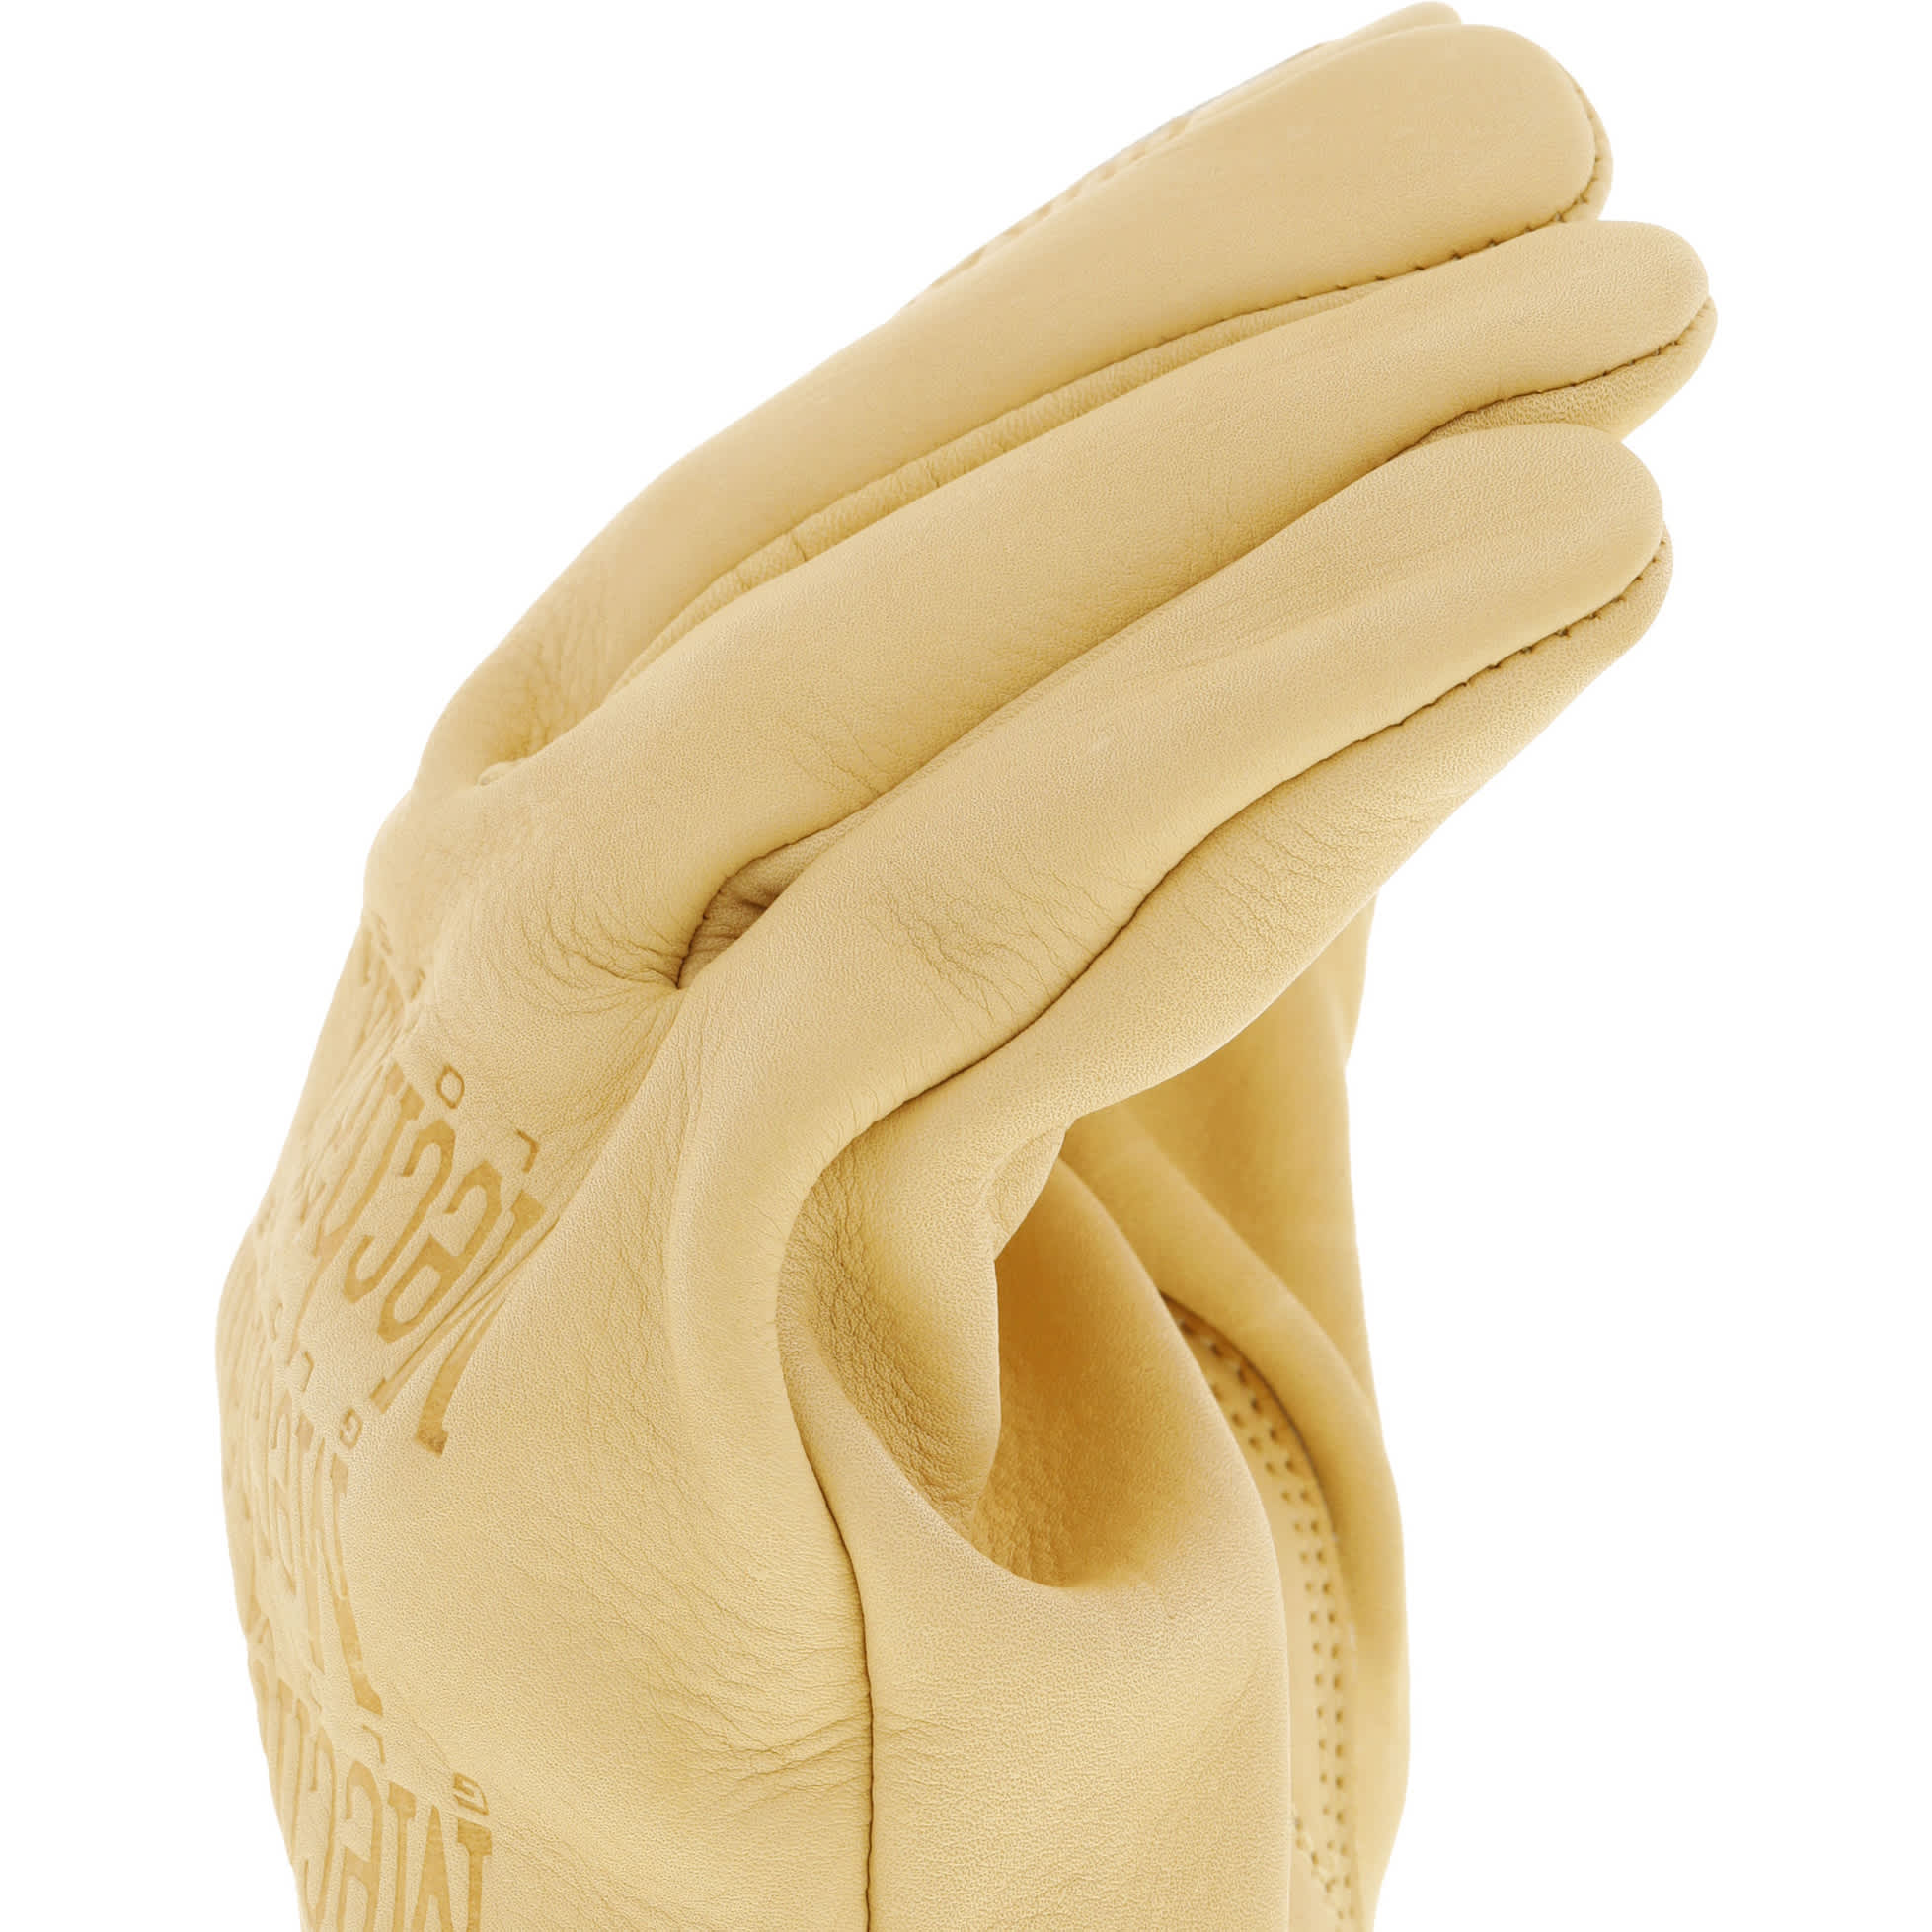 Mechanix Wear® Men’s DuraHide® Leather Driver Glove